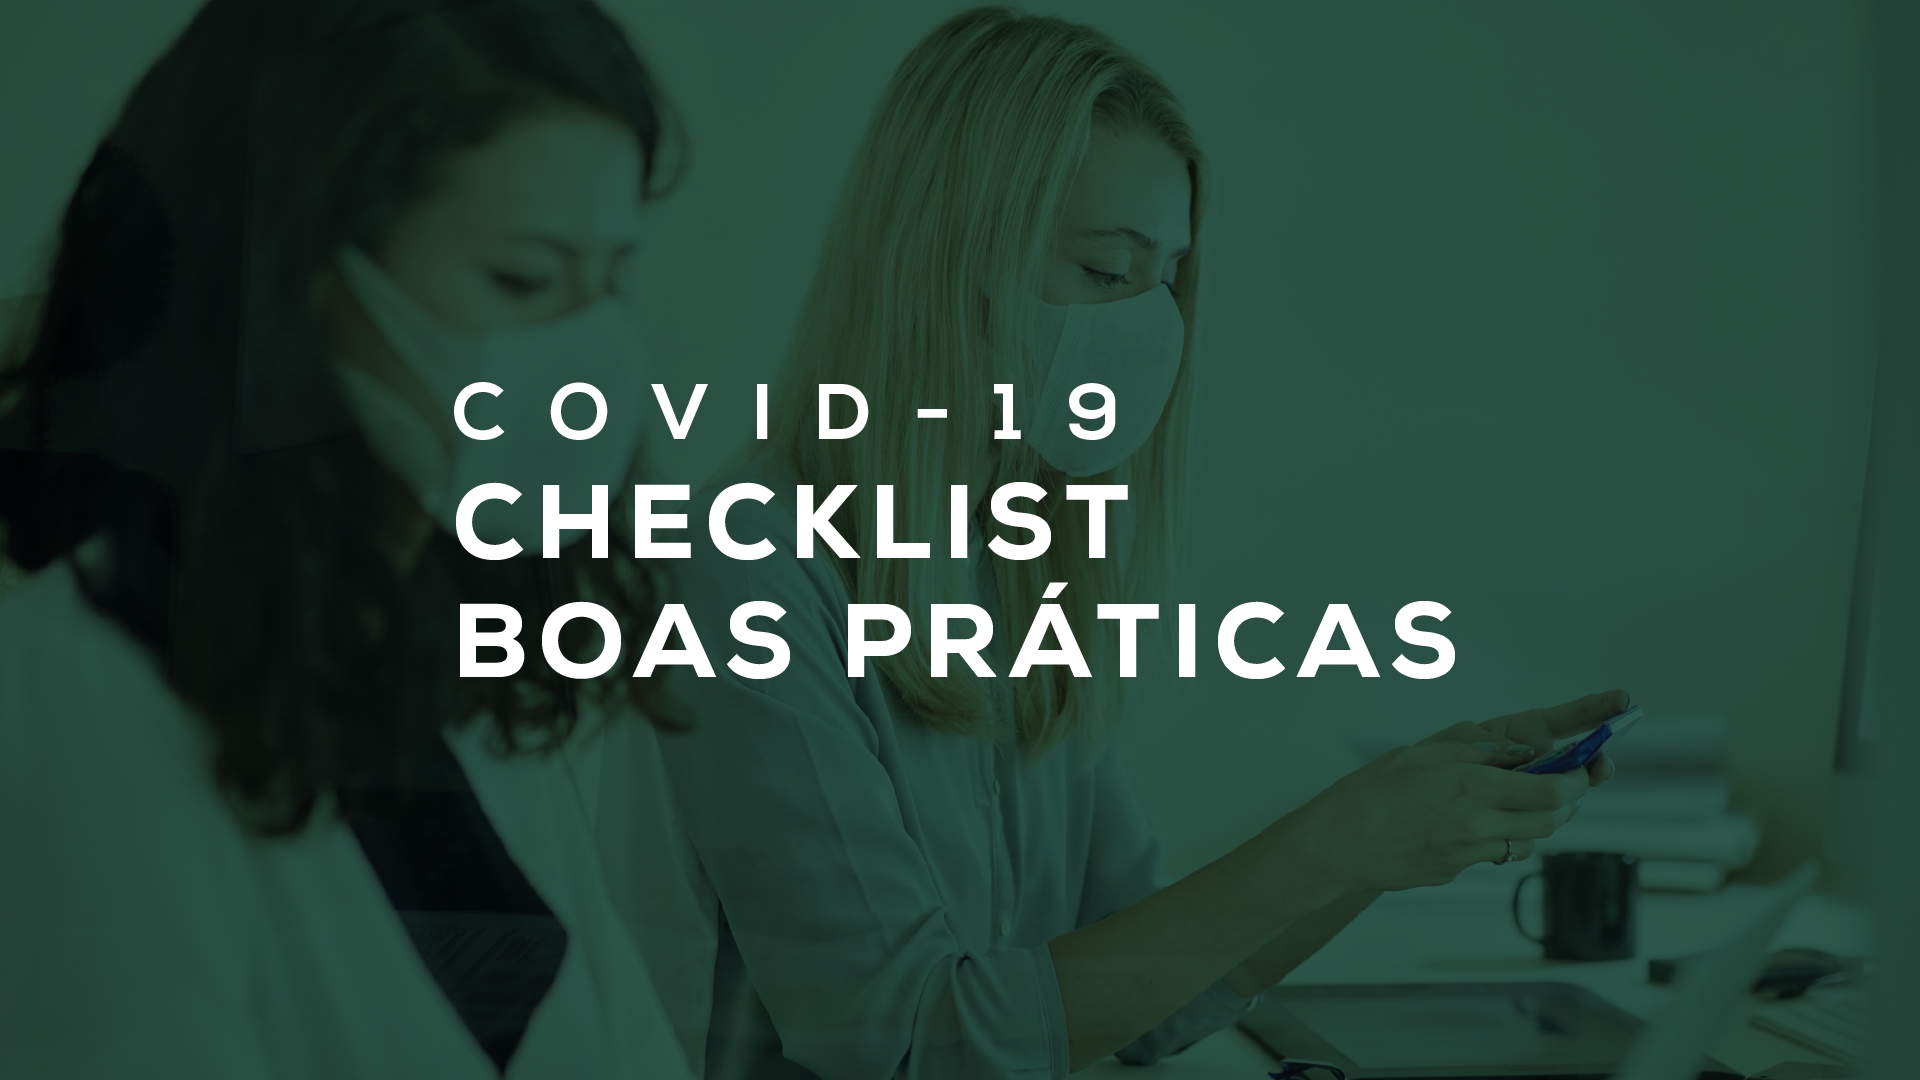 acervo_covid 07. Checklist boas praticas covid